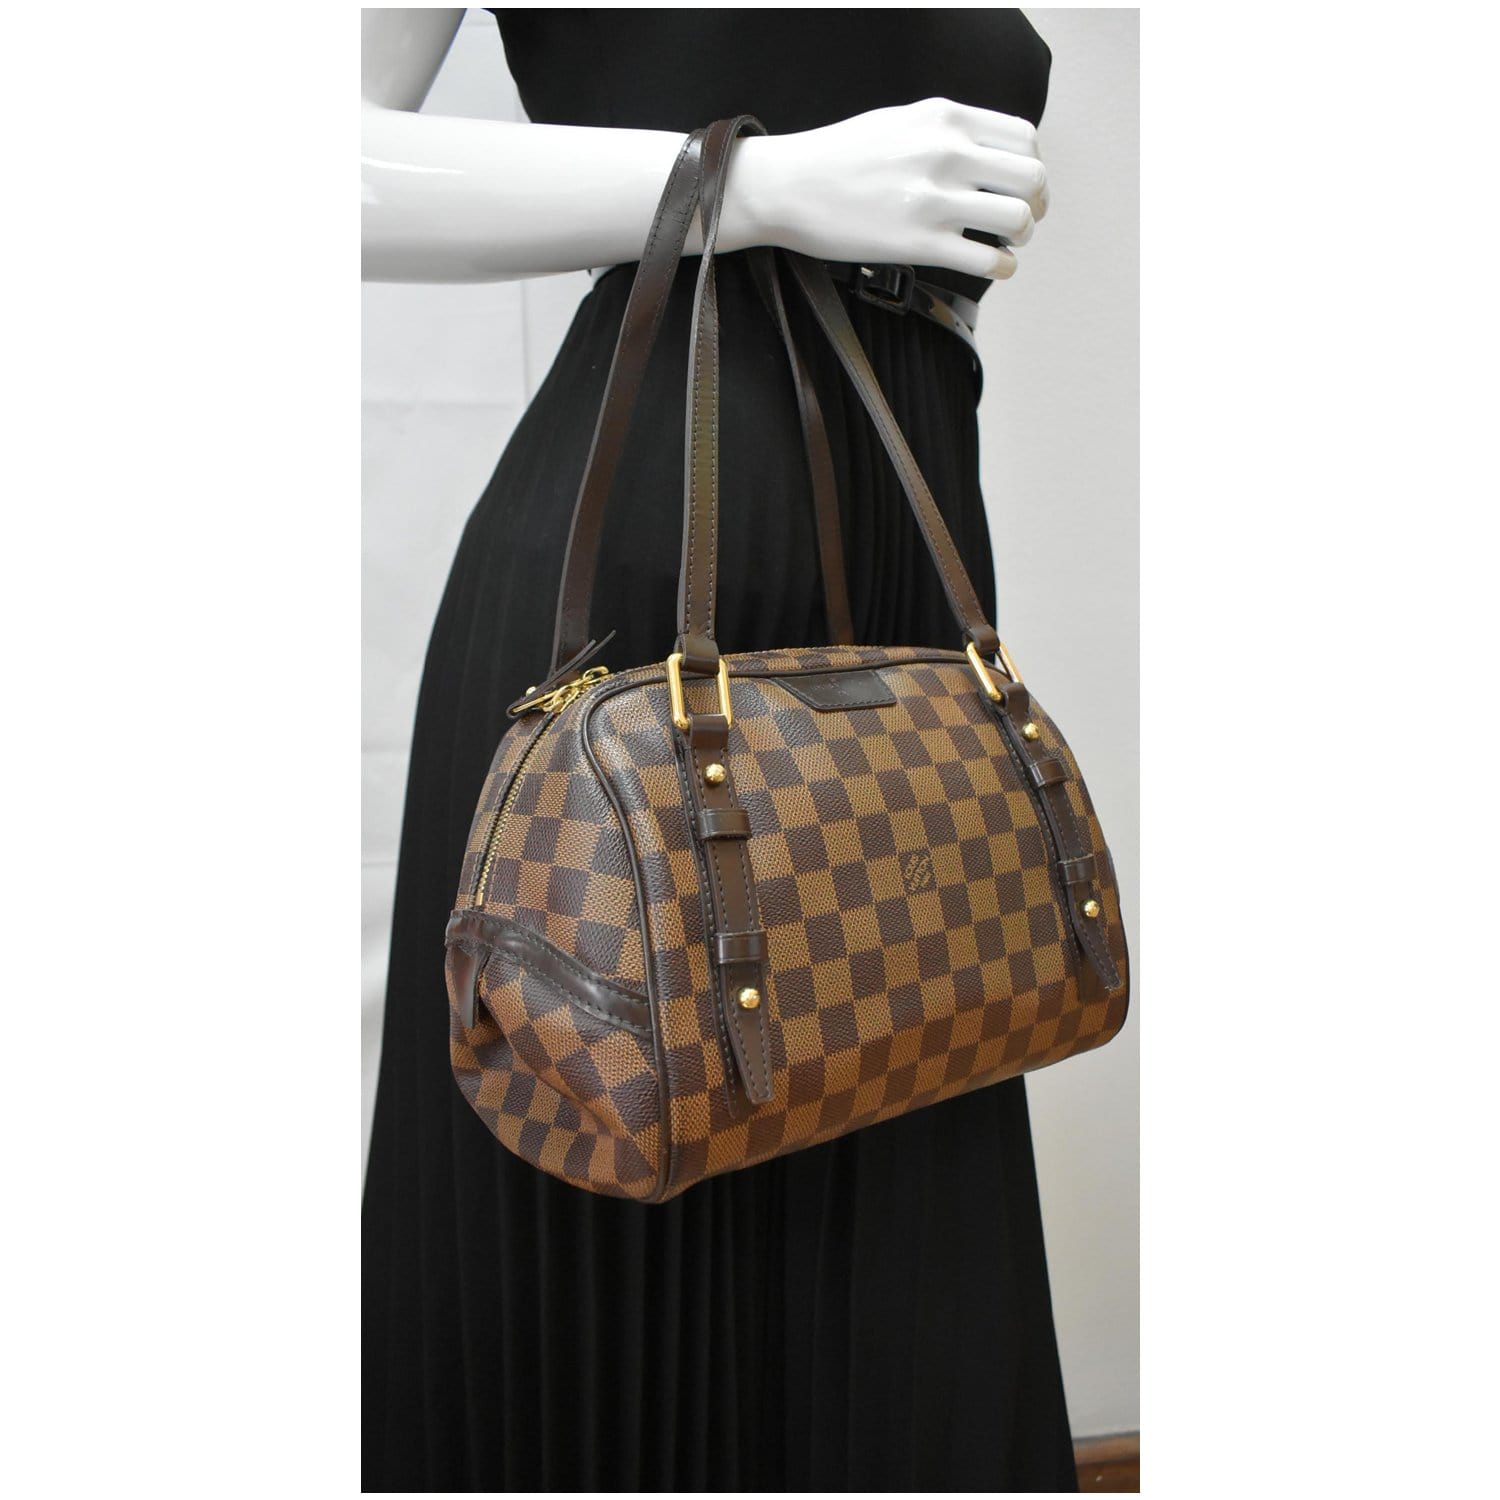 Louis Vuitton - Authenticated Rivington Handbag - Cloth Brown Plain for Women, Very Good Condition